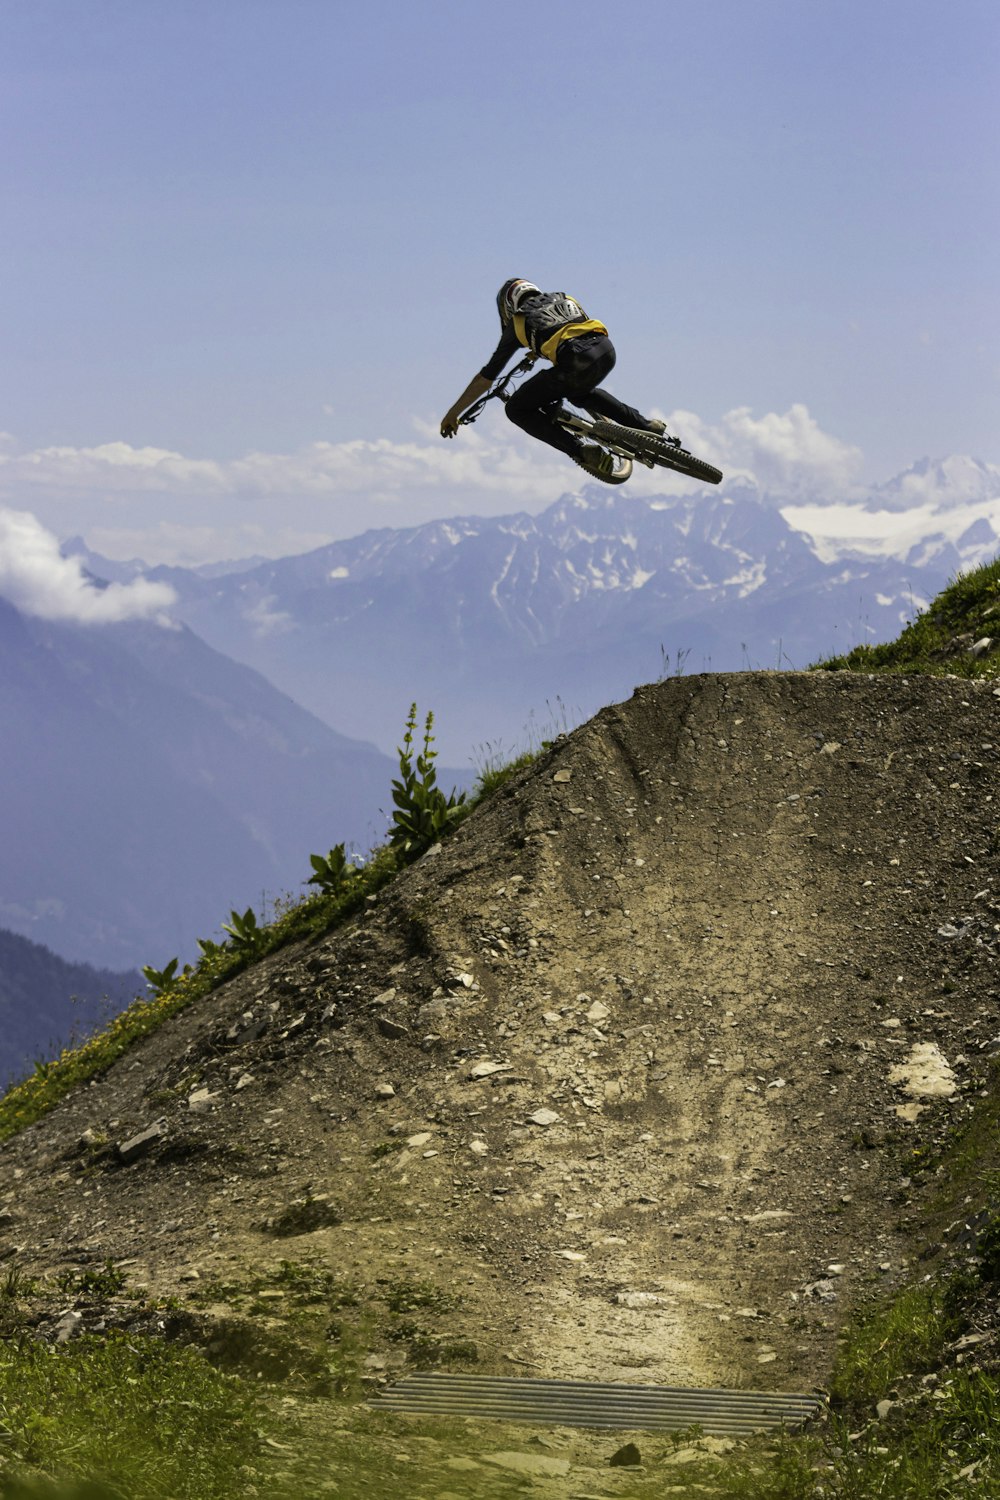 man in black jacket and black helmet riding on motocross dirt bike on mountain during daytime